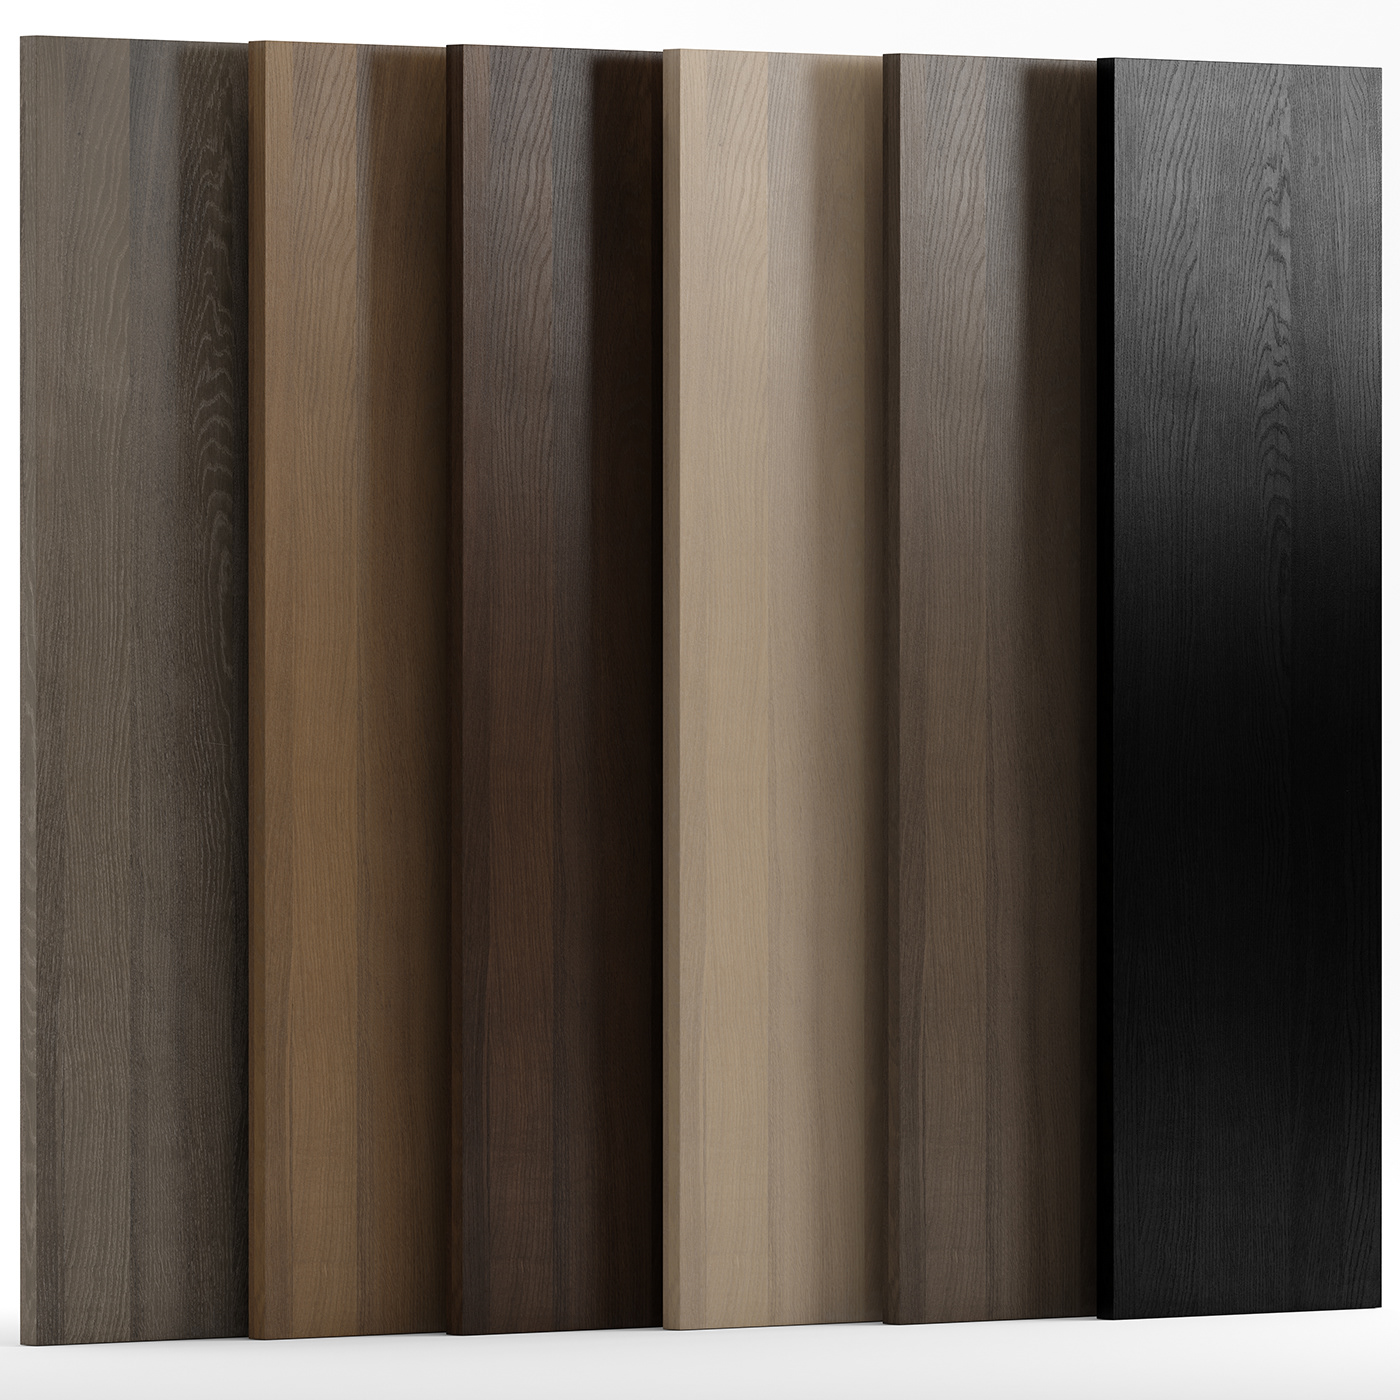 3ds max architecture corona interior design  material oak texture vray wood wooden